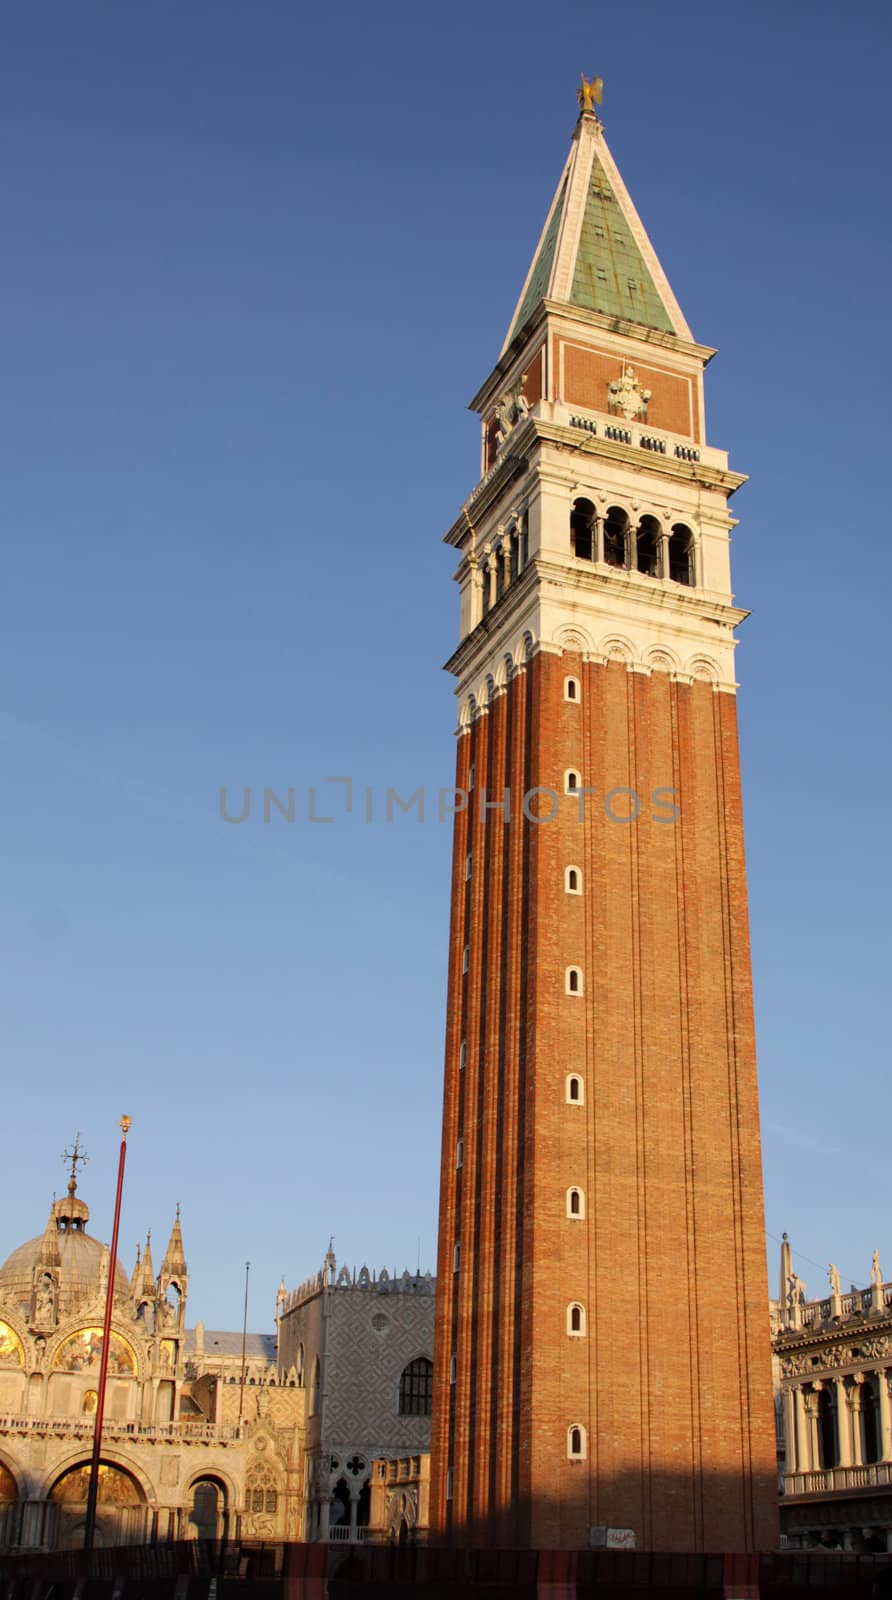 St. Mark's Campanile and basilica in Venice, Italy.
